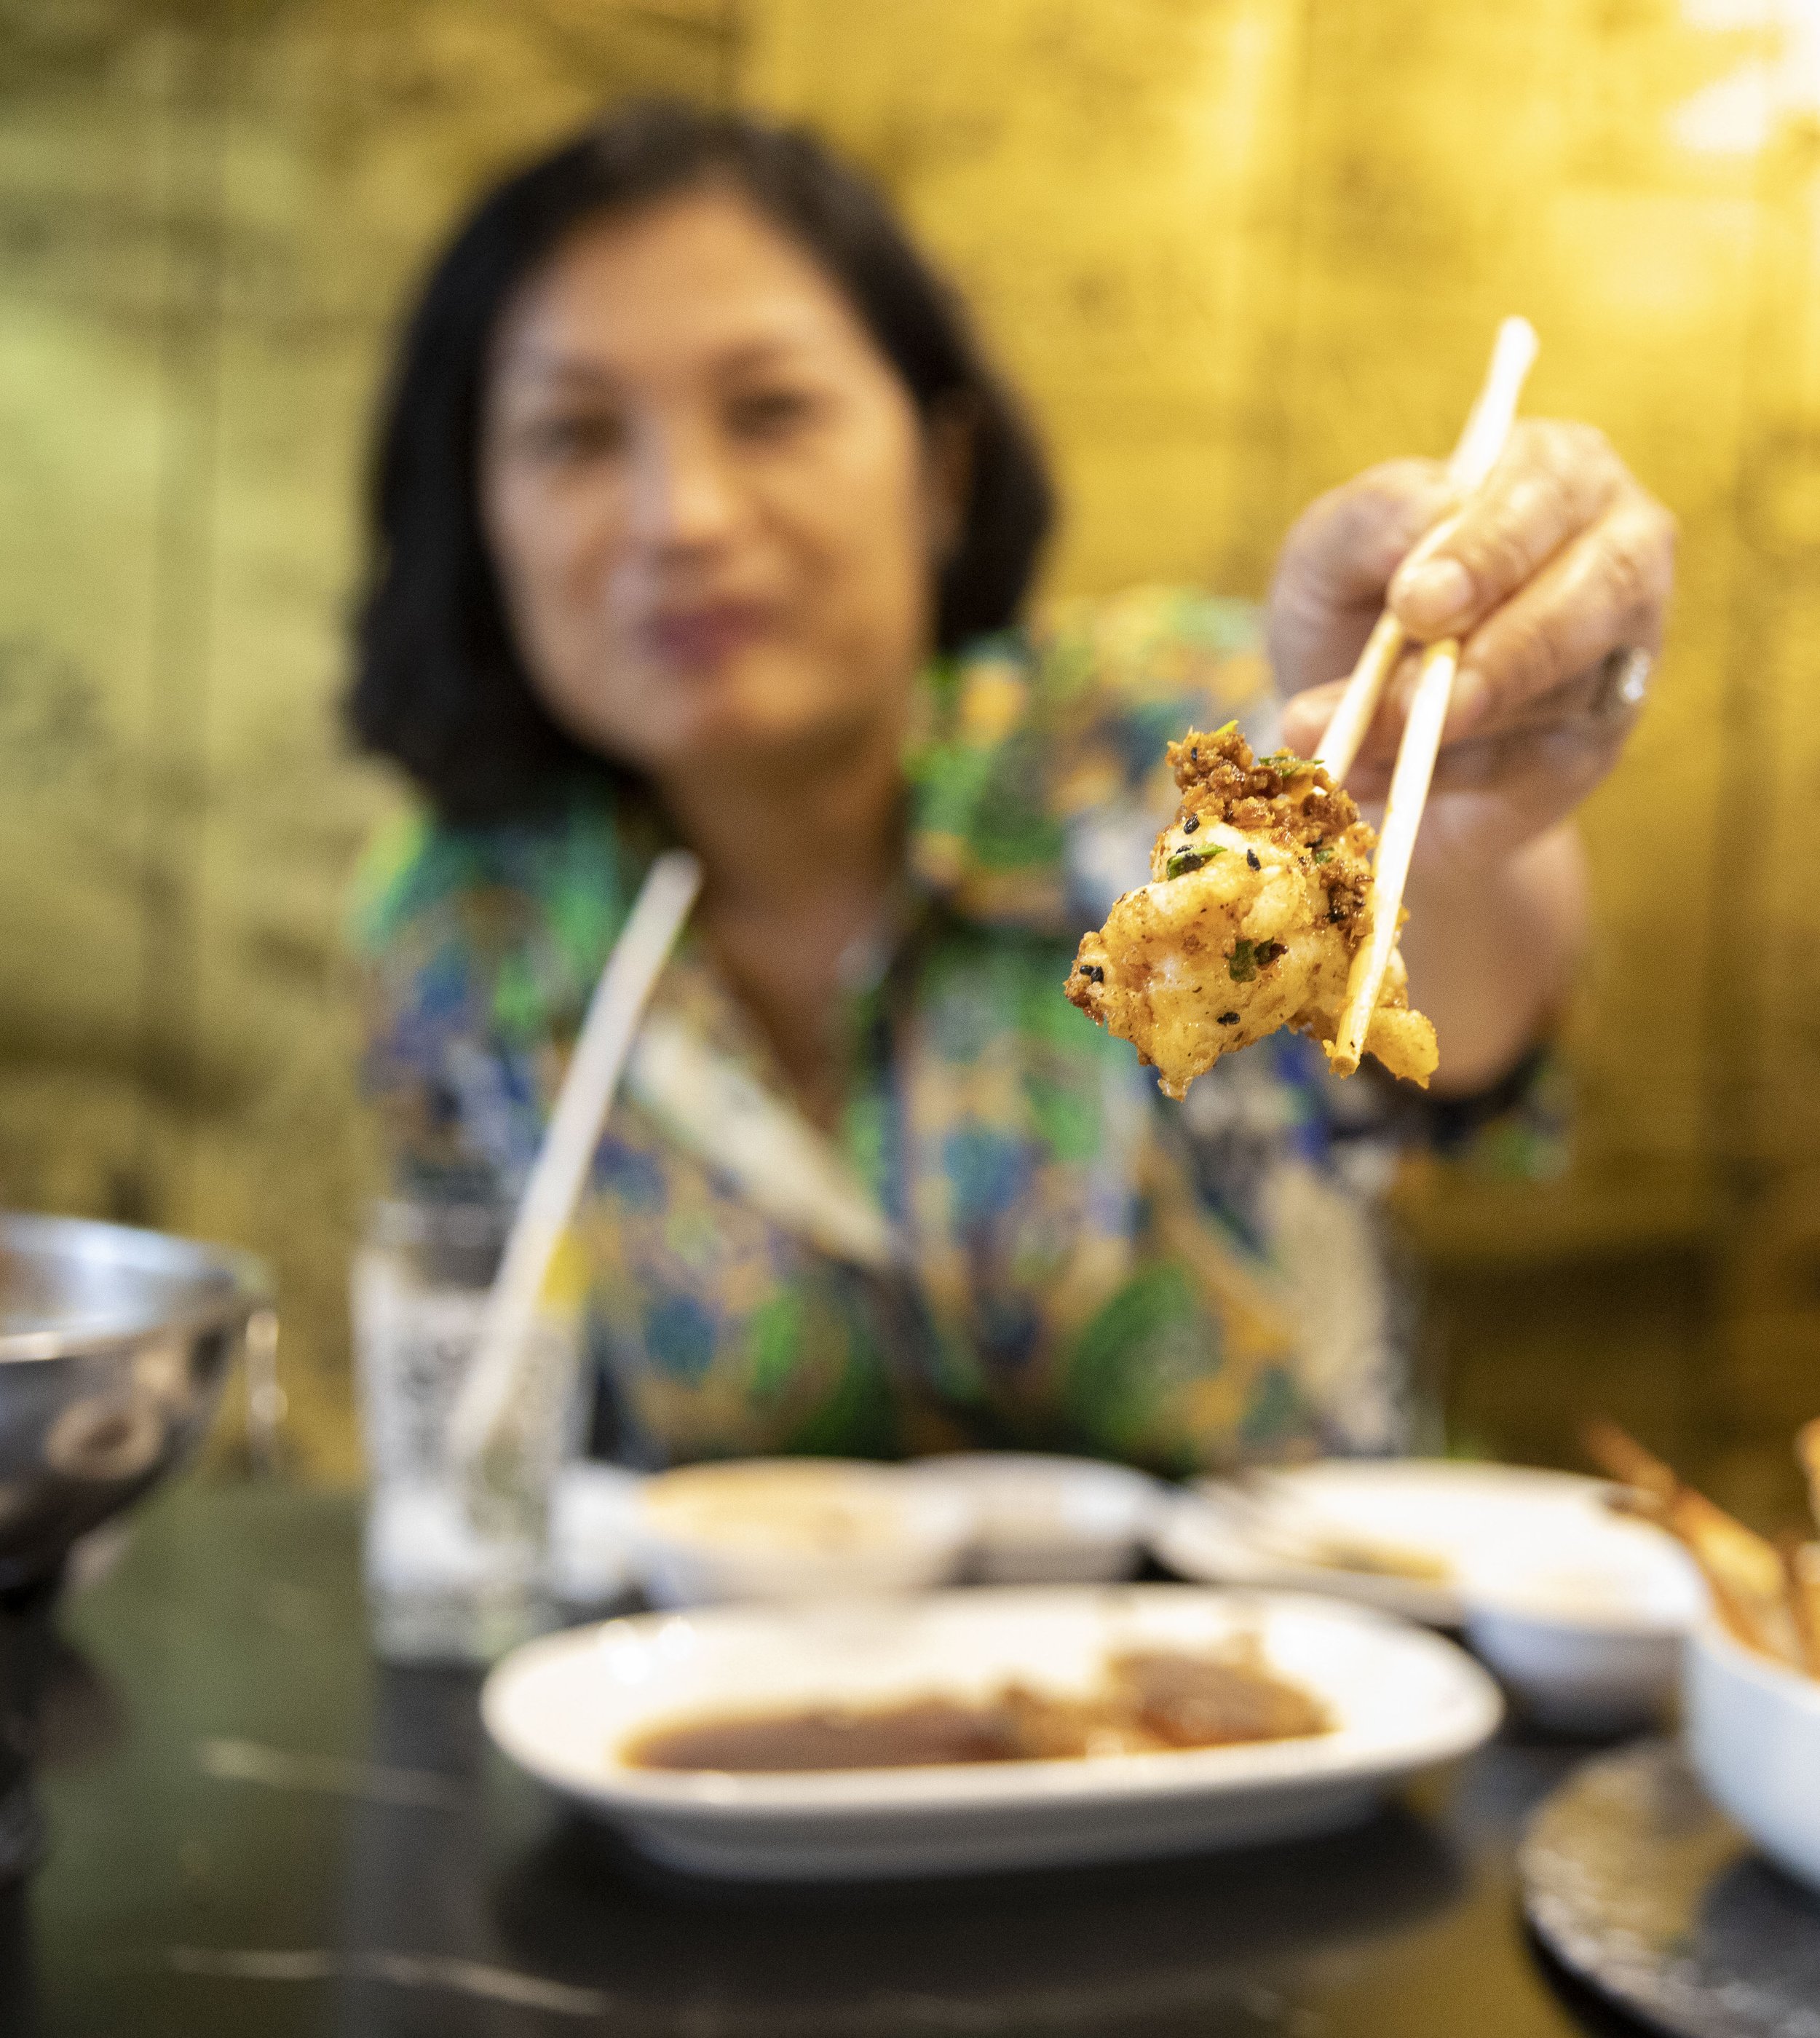  Chutatip “Nok” Suntaranon shows off a piece of wok fried Phuket lobster at Chef Gigg Kamol's restaurant in Bangkok, Thailand on Thursday, April 21, 2022.  